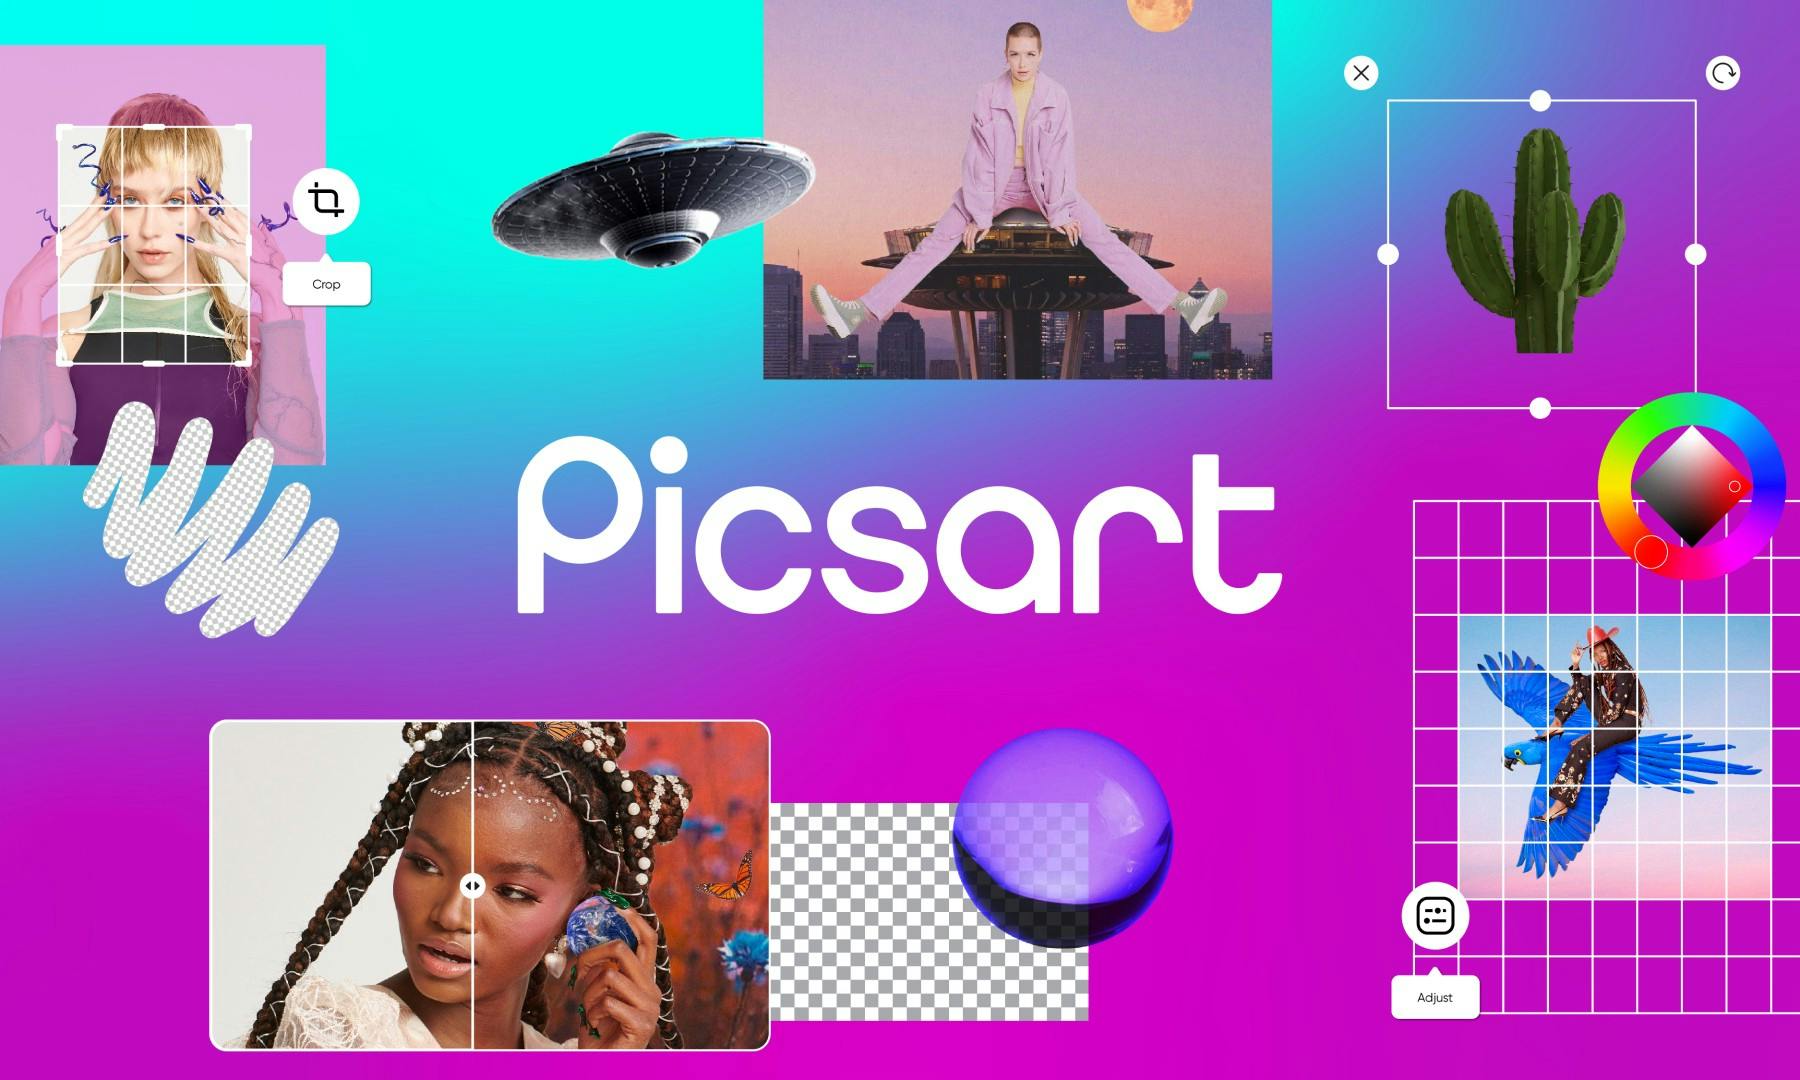 Picsart's new branding